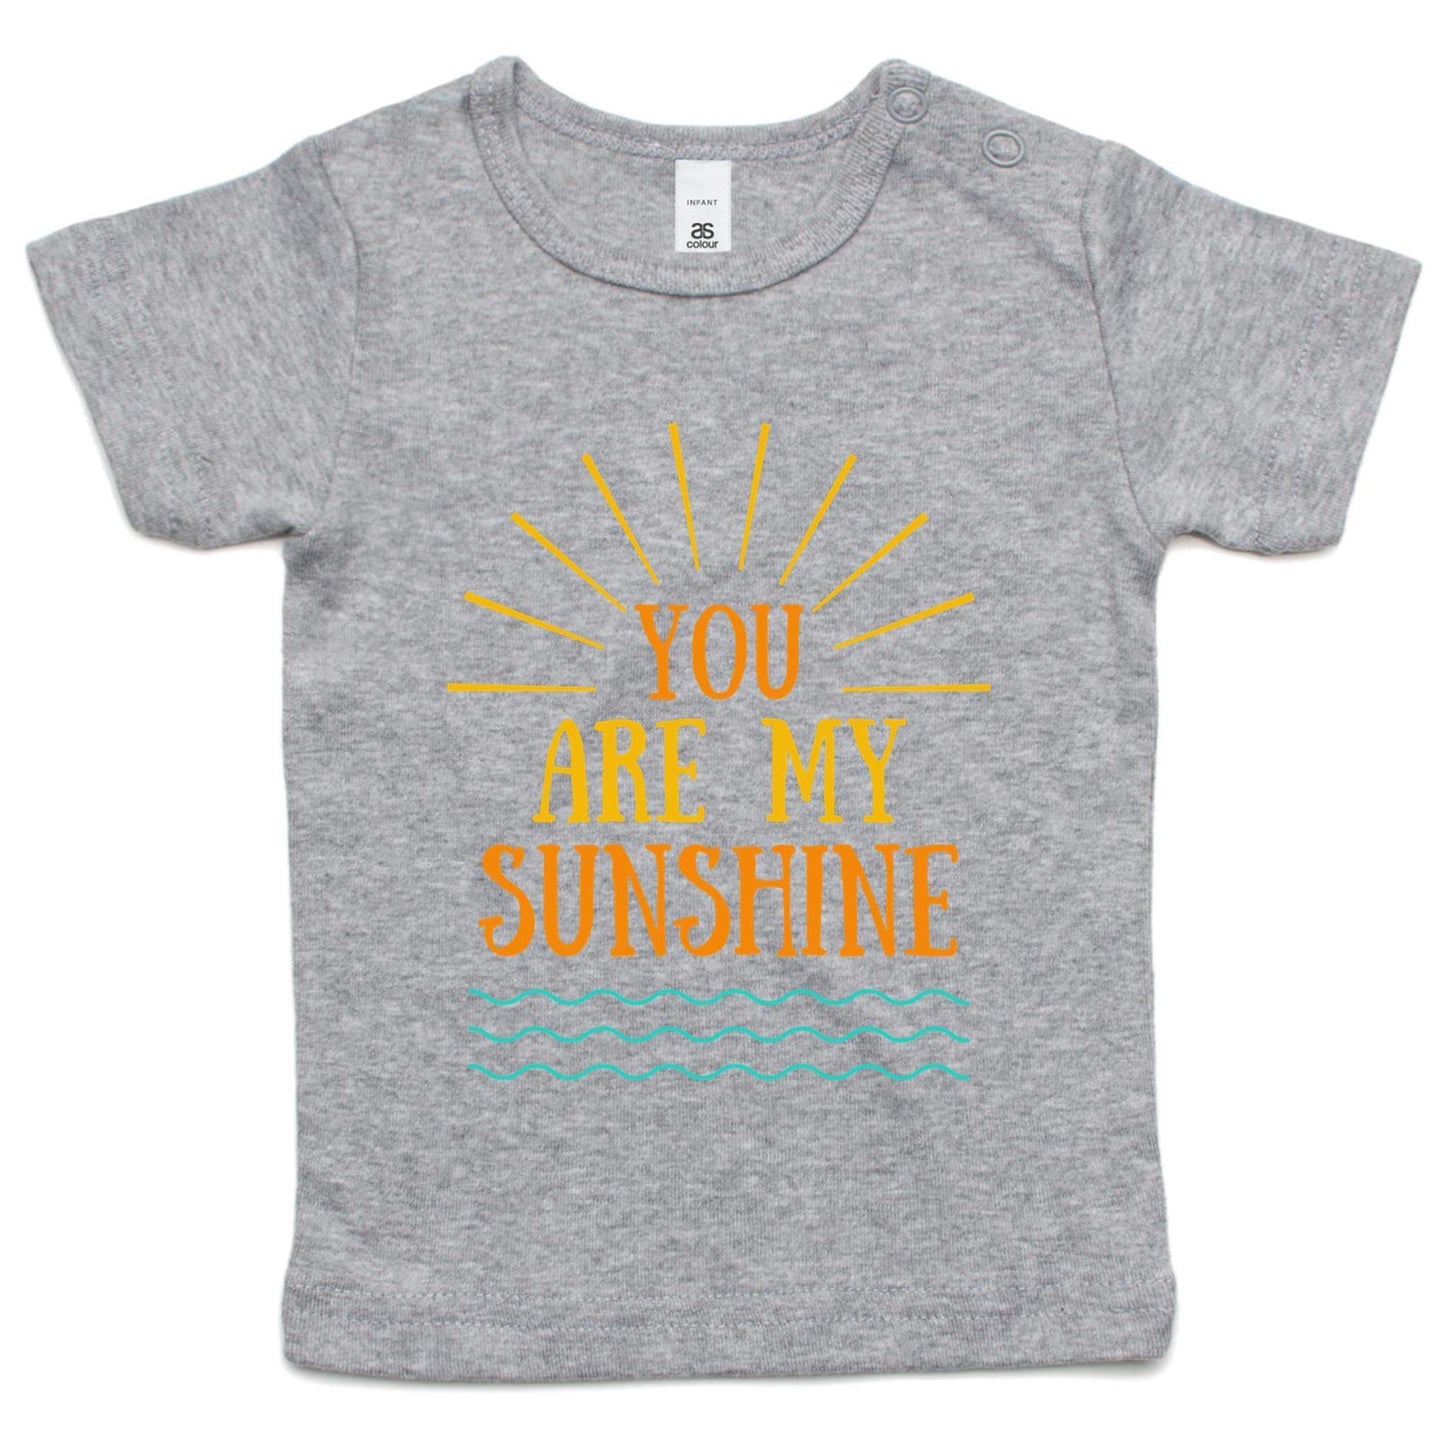 You Are My Sunshine - Baby T-shirt Grey Marle Baby T-shirt kids